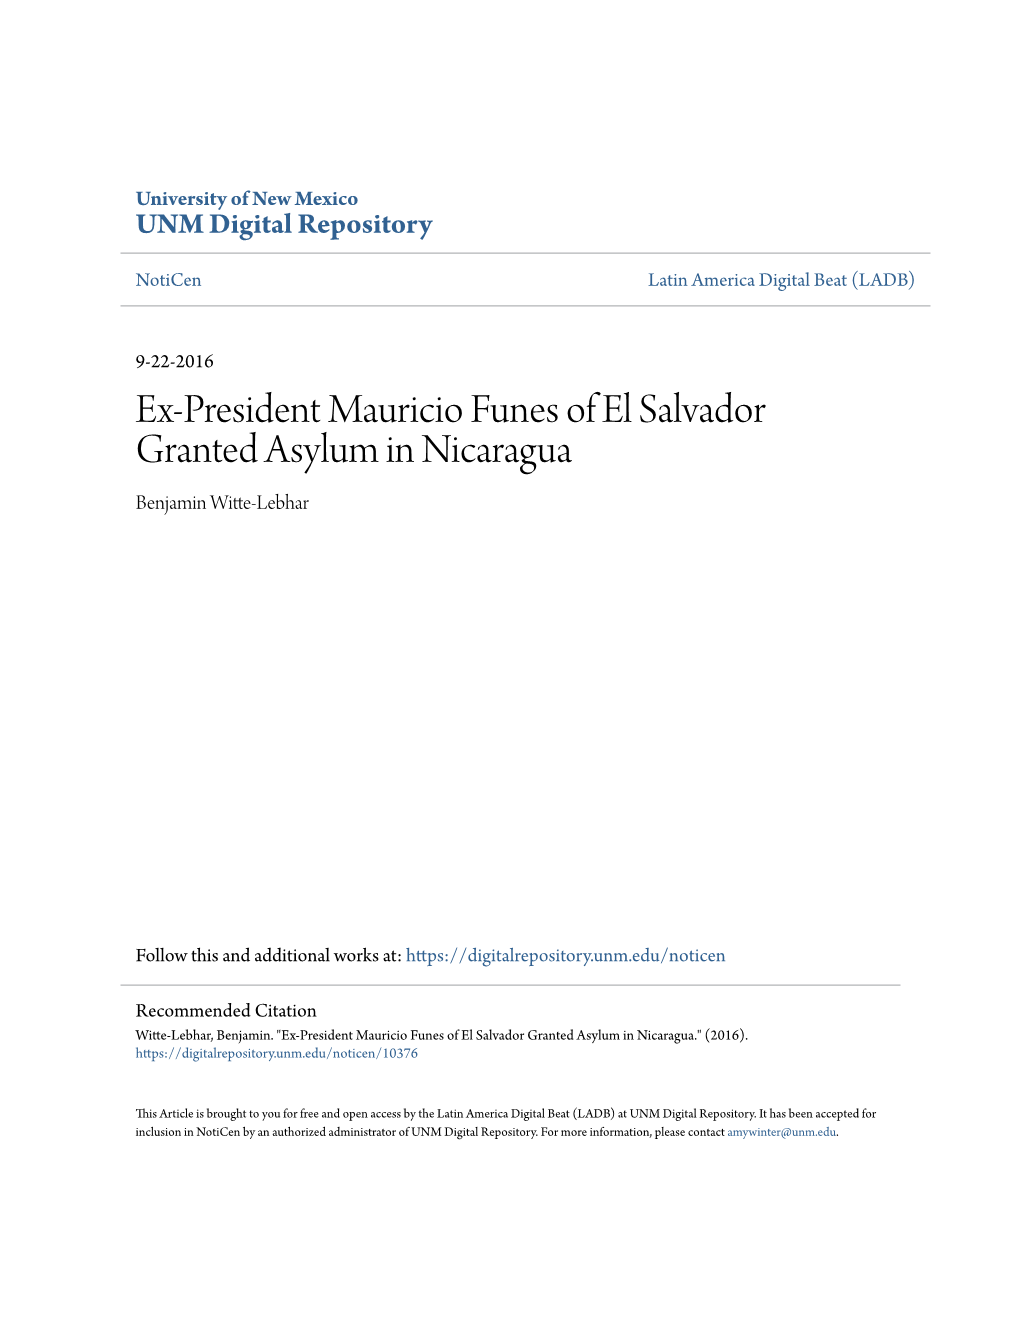 Ex-President Mauricio Funes of El Salvador Granted Asylum in Nicaragua Benjamin Witte-Lebhar